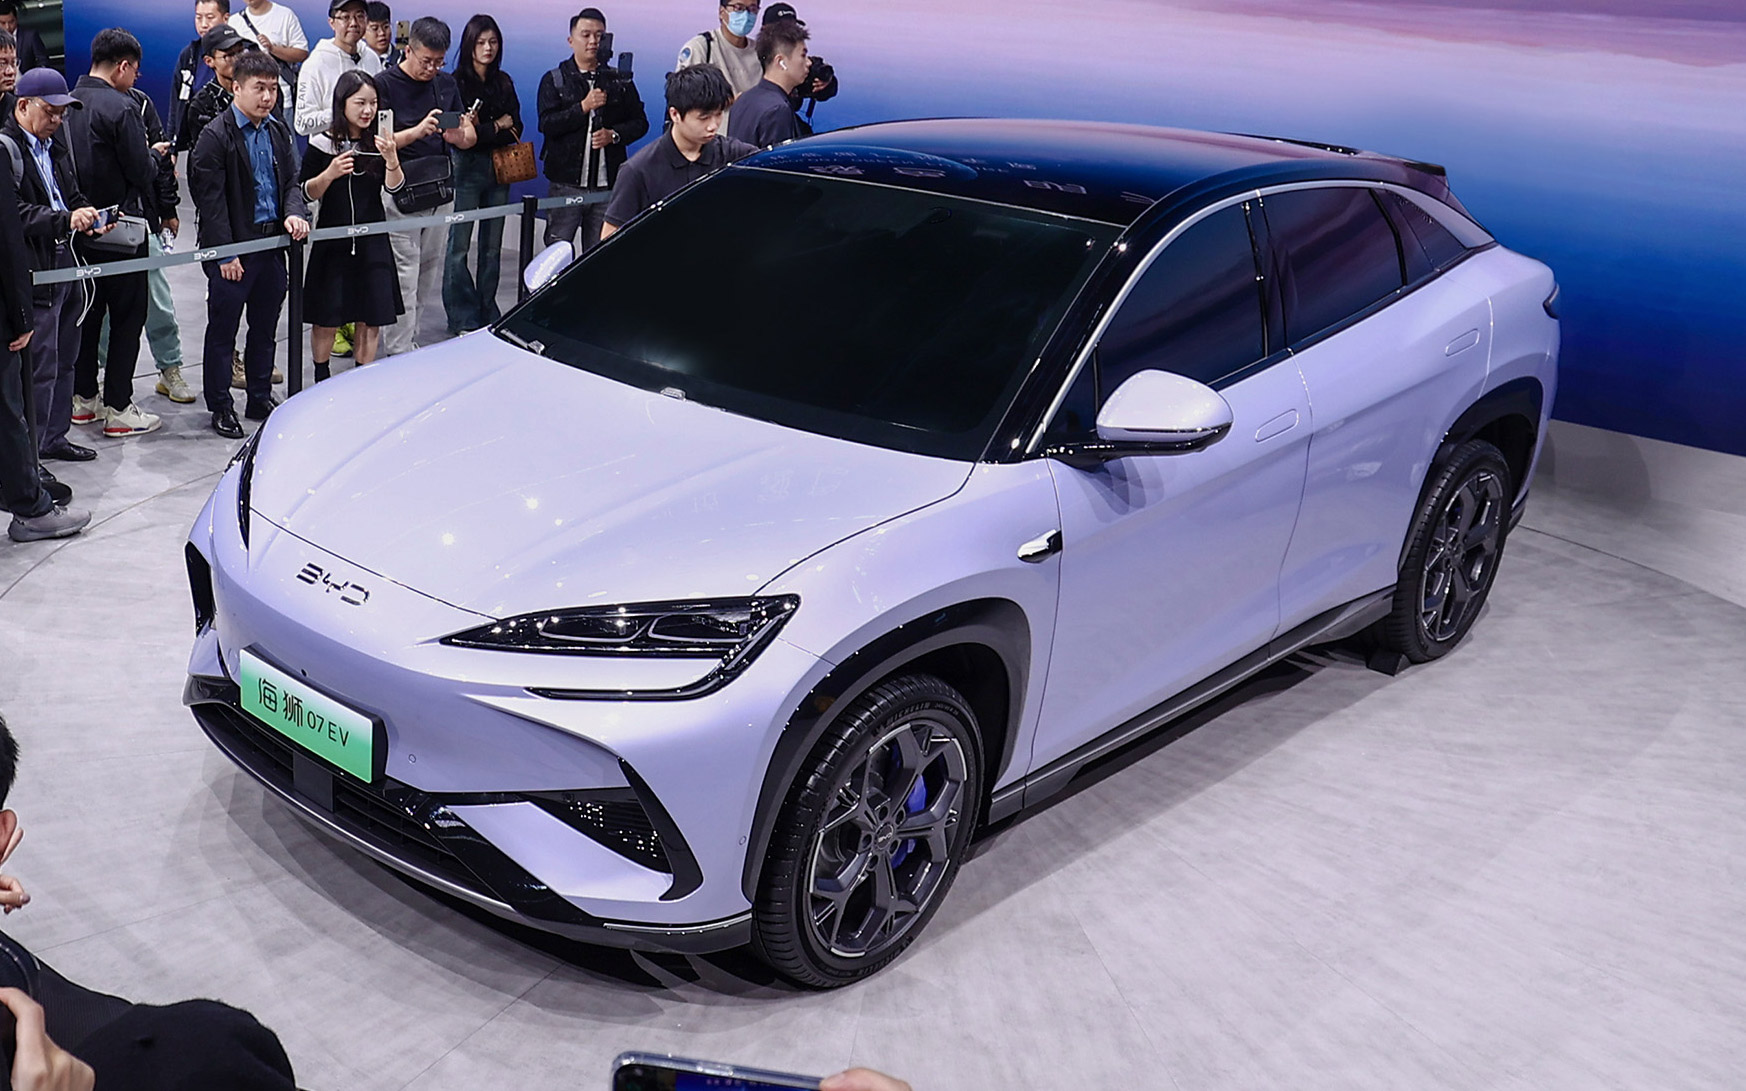 BYD Sea Lion 07 EV China debut-10 - Paul Tan's Automotive News